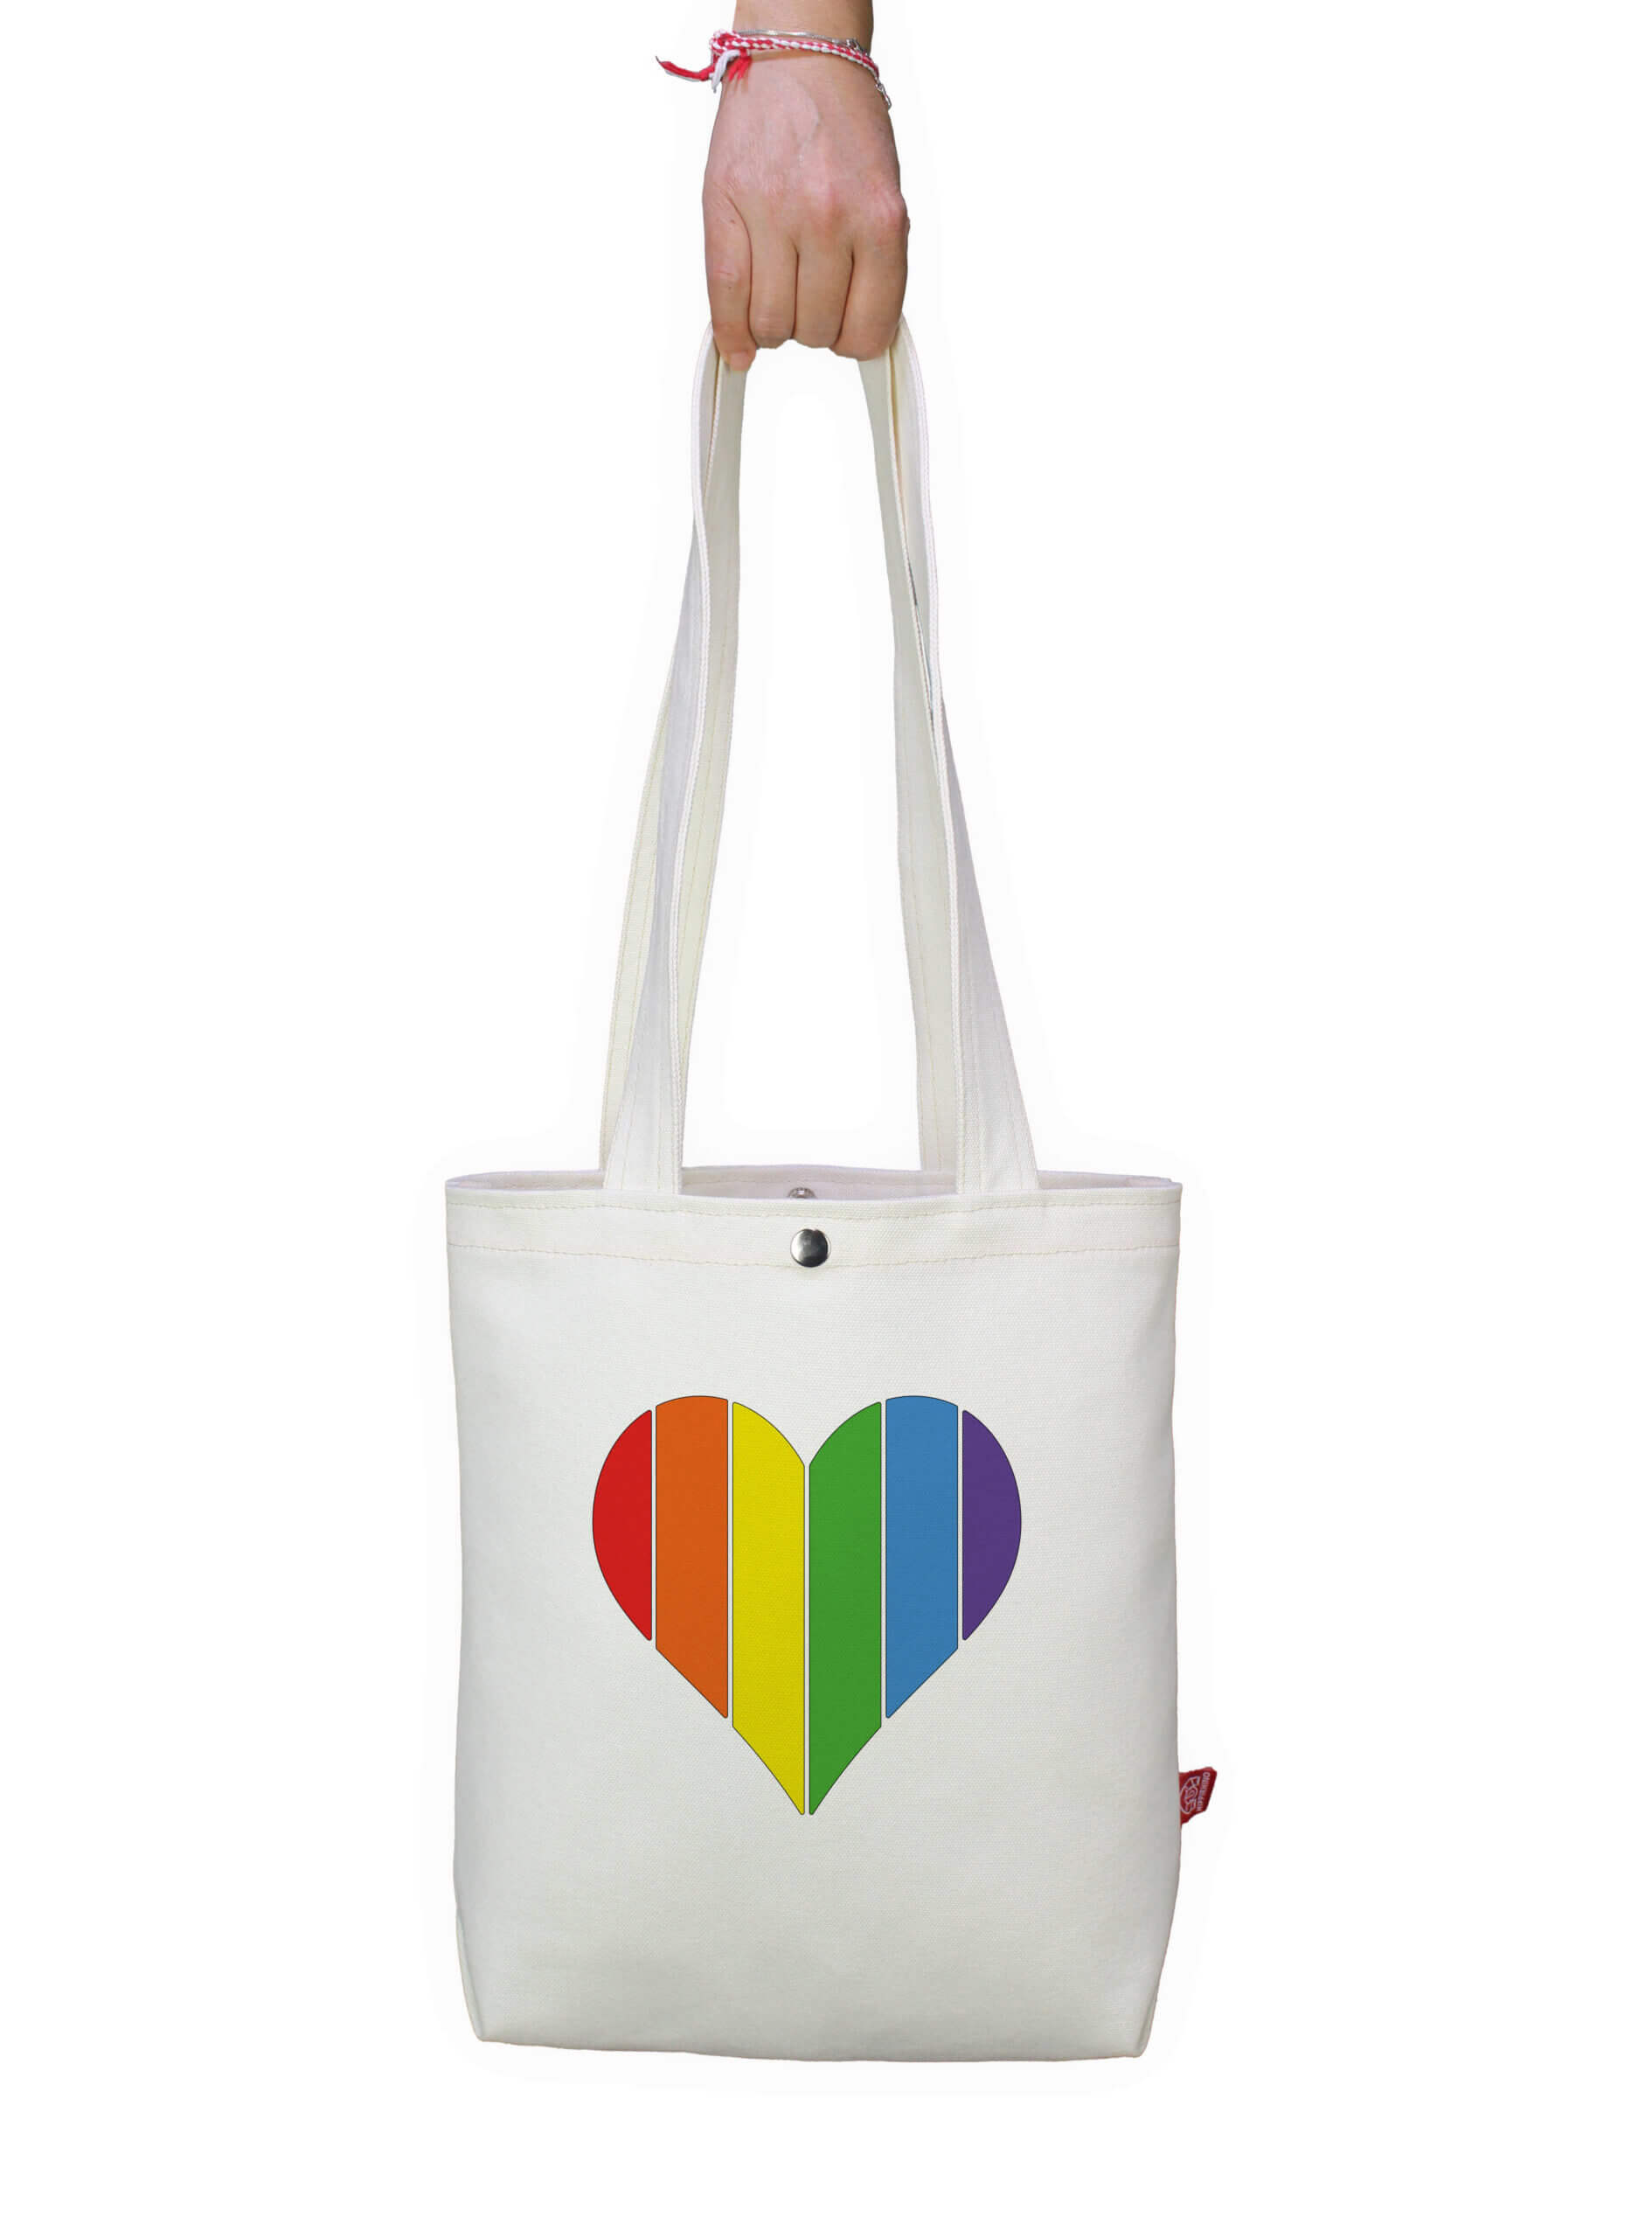 Love Is Love Tote Bag, LGBT Bag, Rainbow Pride, Love Wins Canvas Bag, Gay  Pride Tote, Lesbian Gay, Shopping Bag